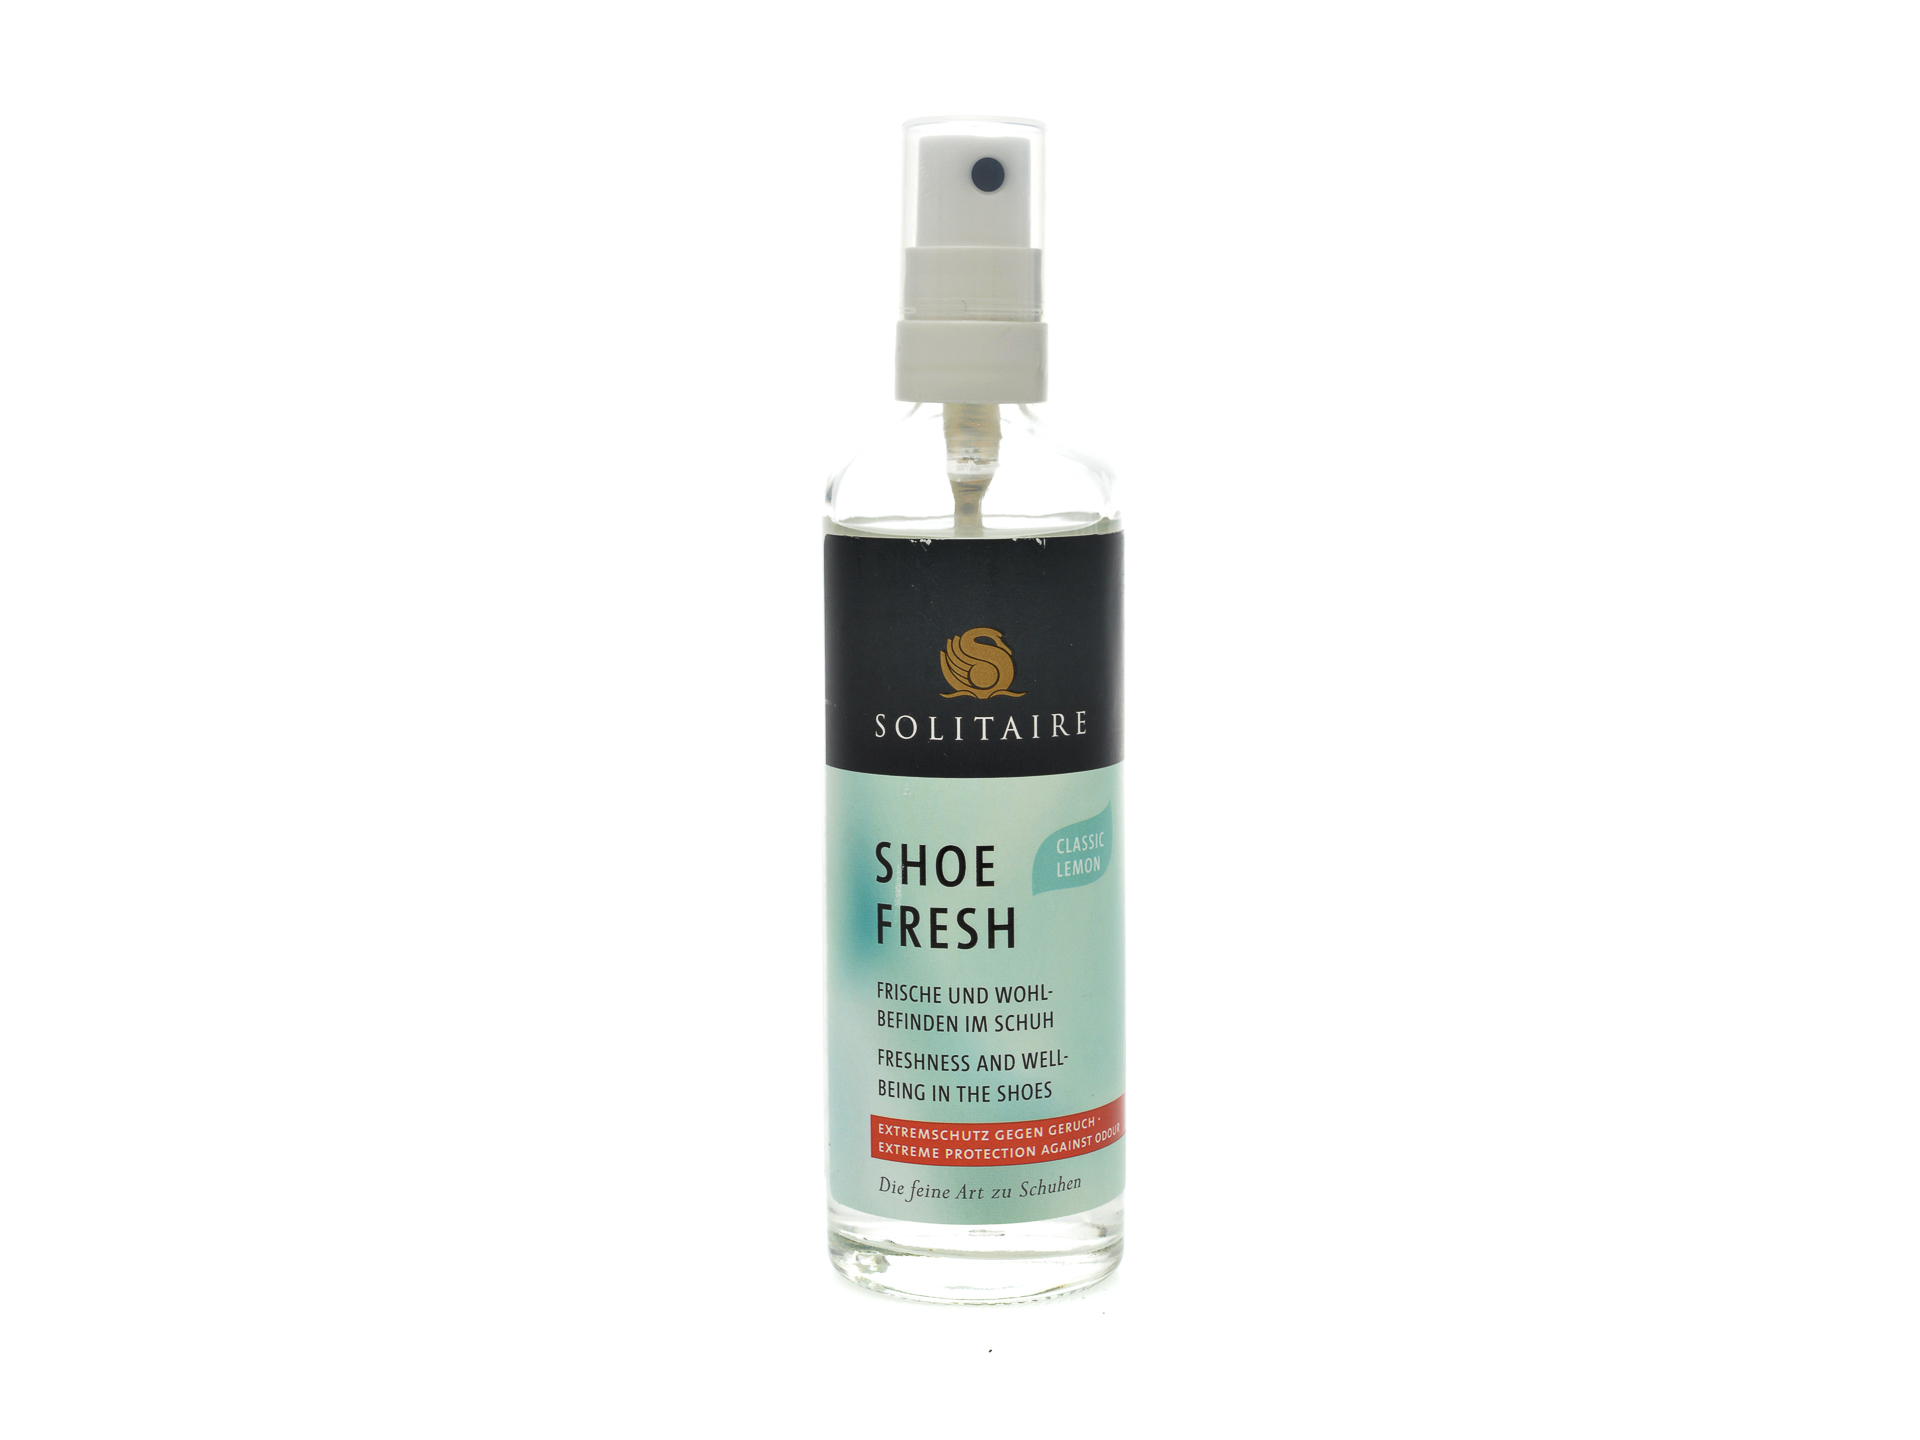 Spray pentru mentinerea mirosului placut in incaltaminte, Solitaire imagine otter.ro 2021